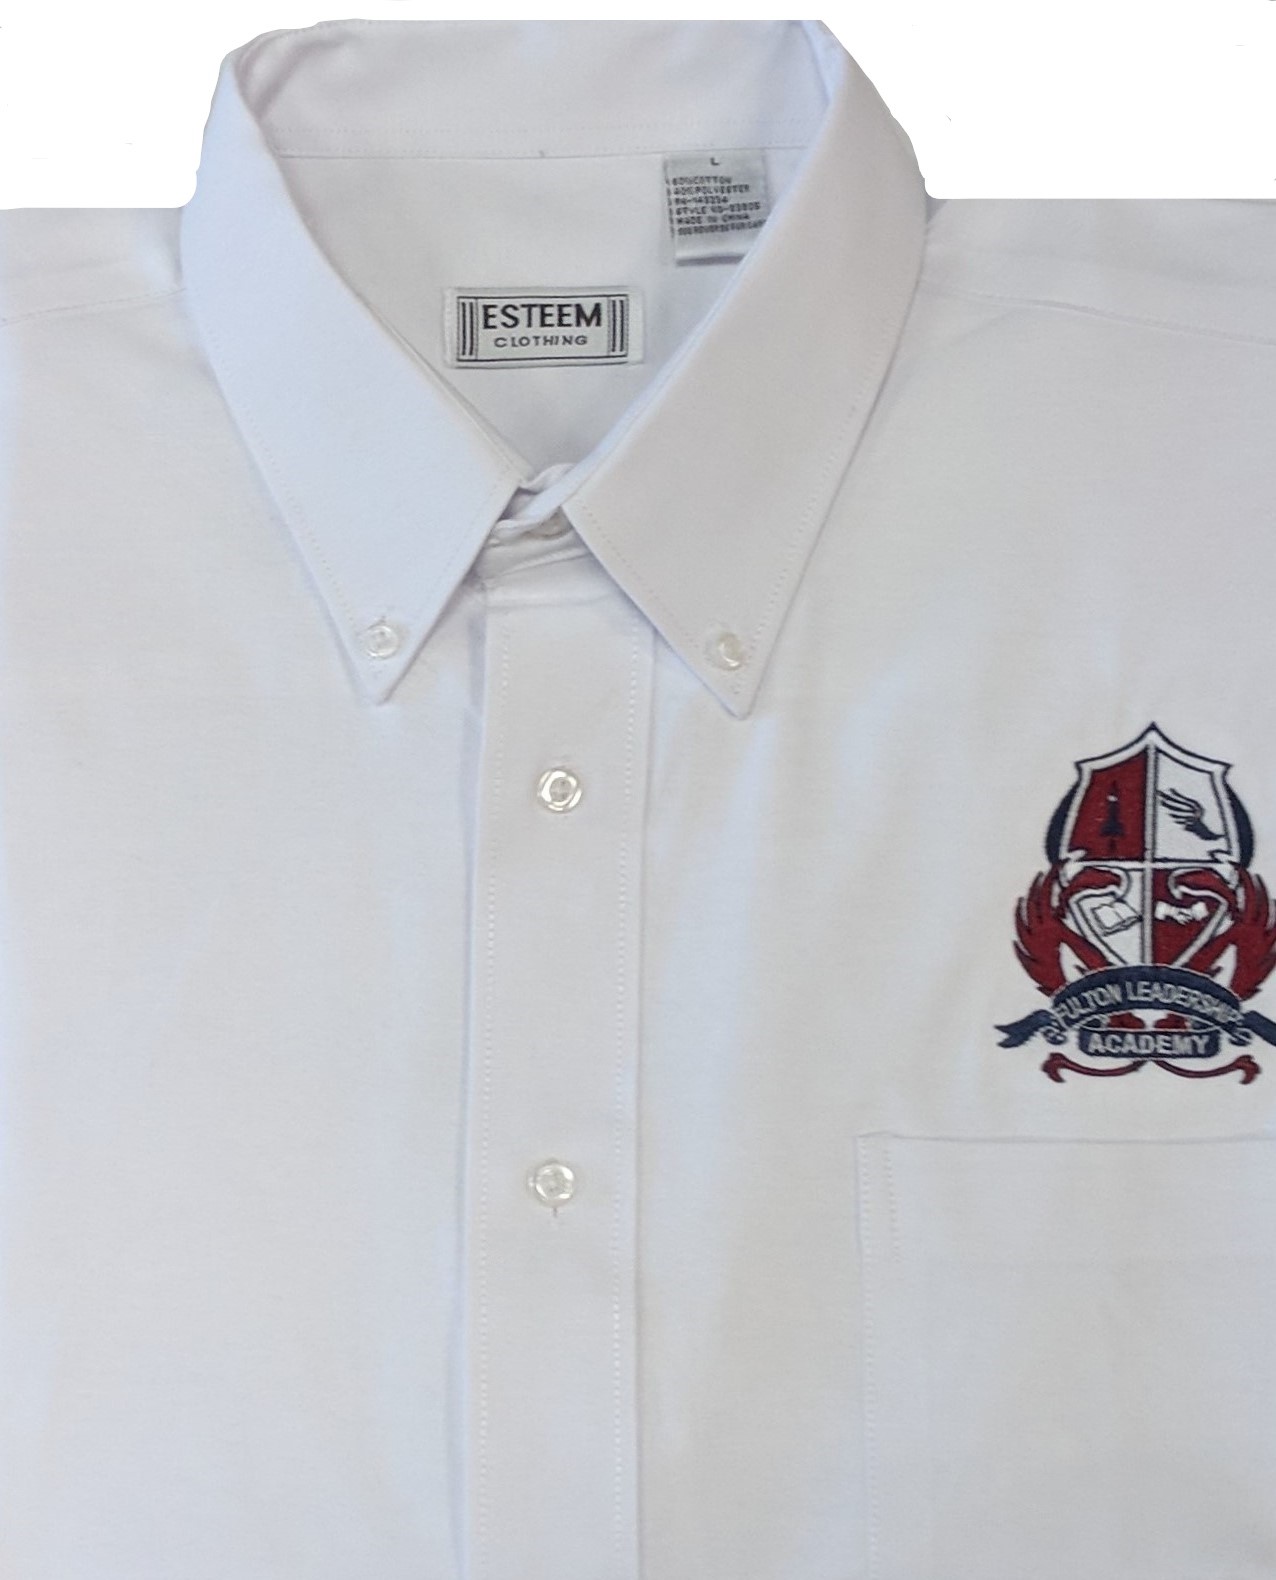 FLA-Adult long sleeve Oxford shirt with logo(High school)